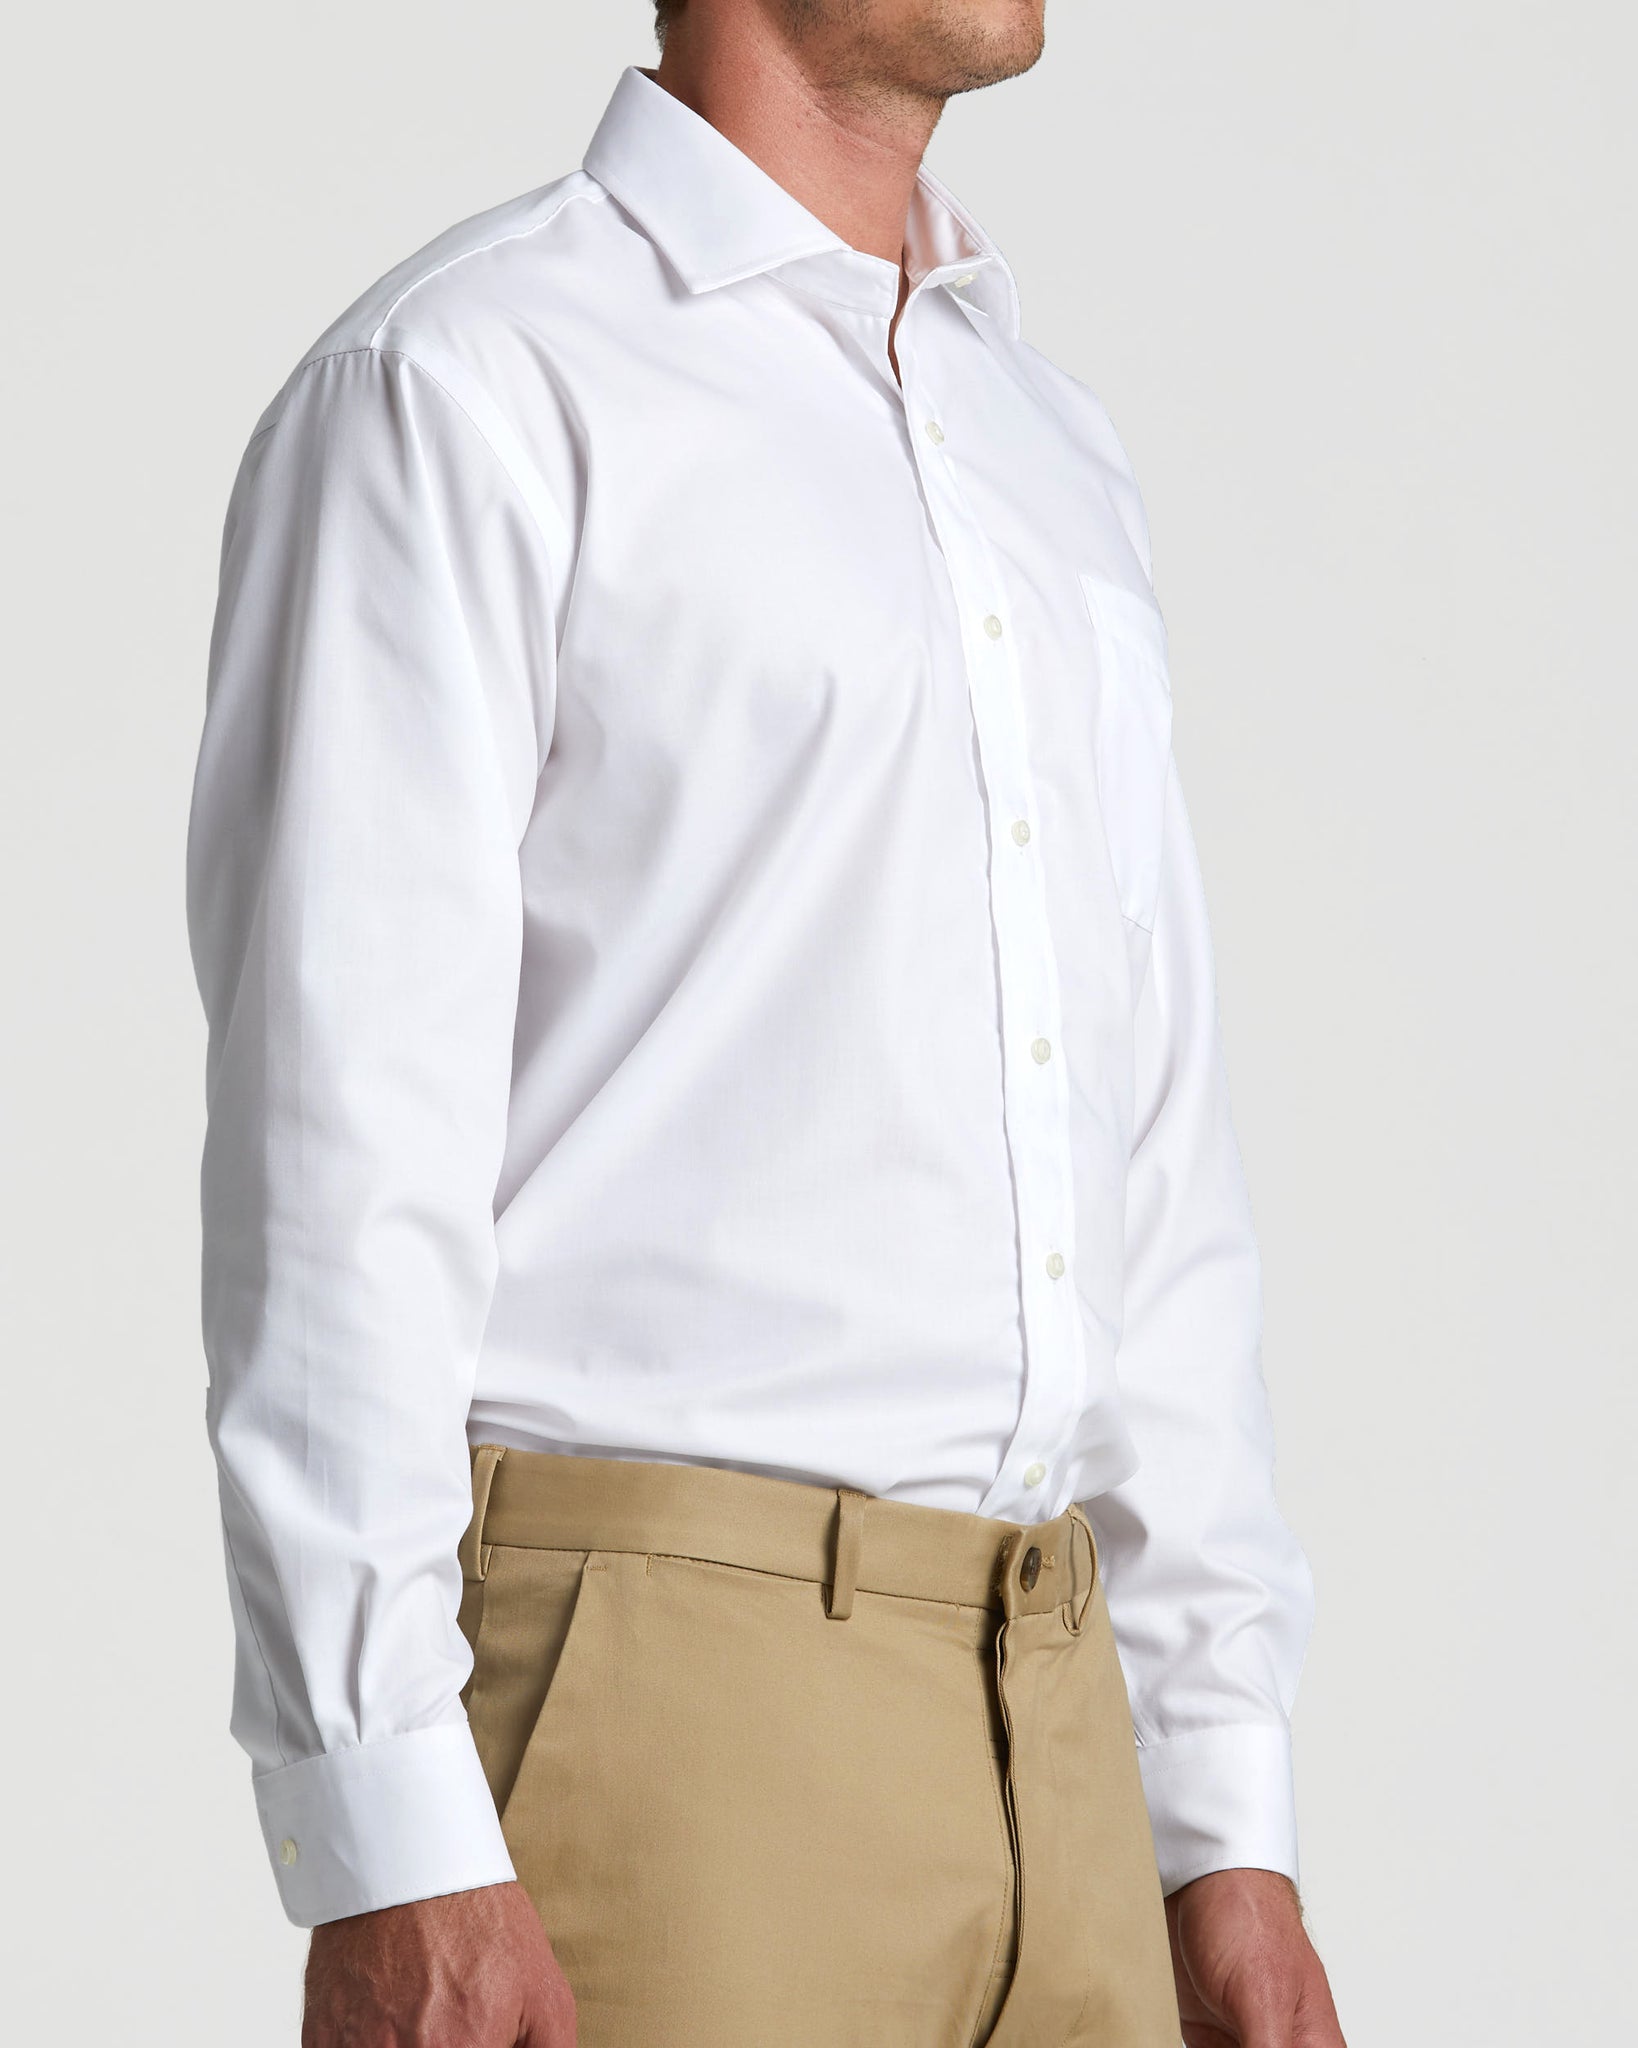 MagnaClick Regular Fit Dress Shirt (Mens) - White